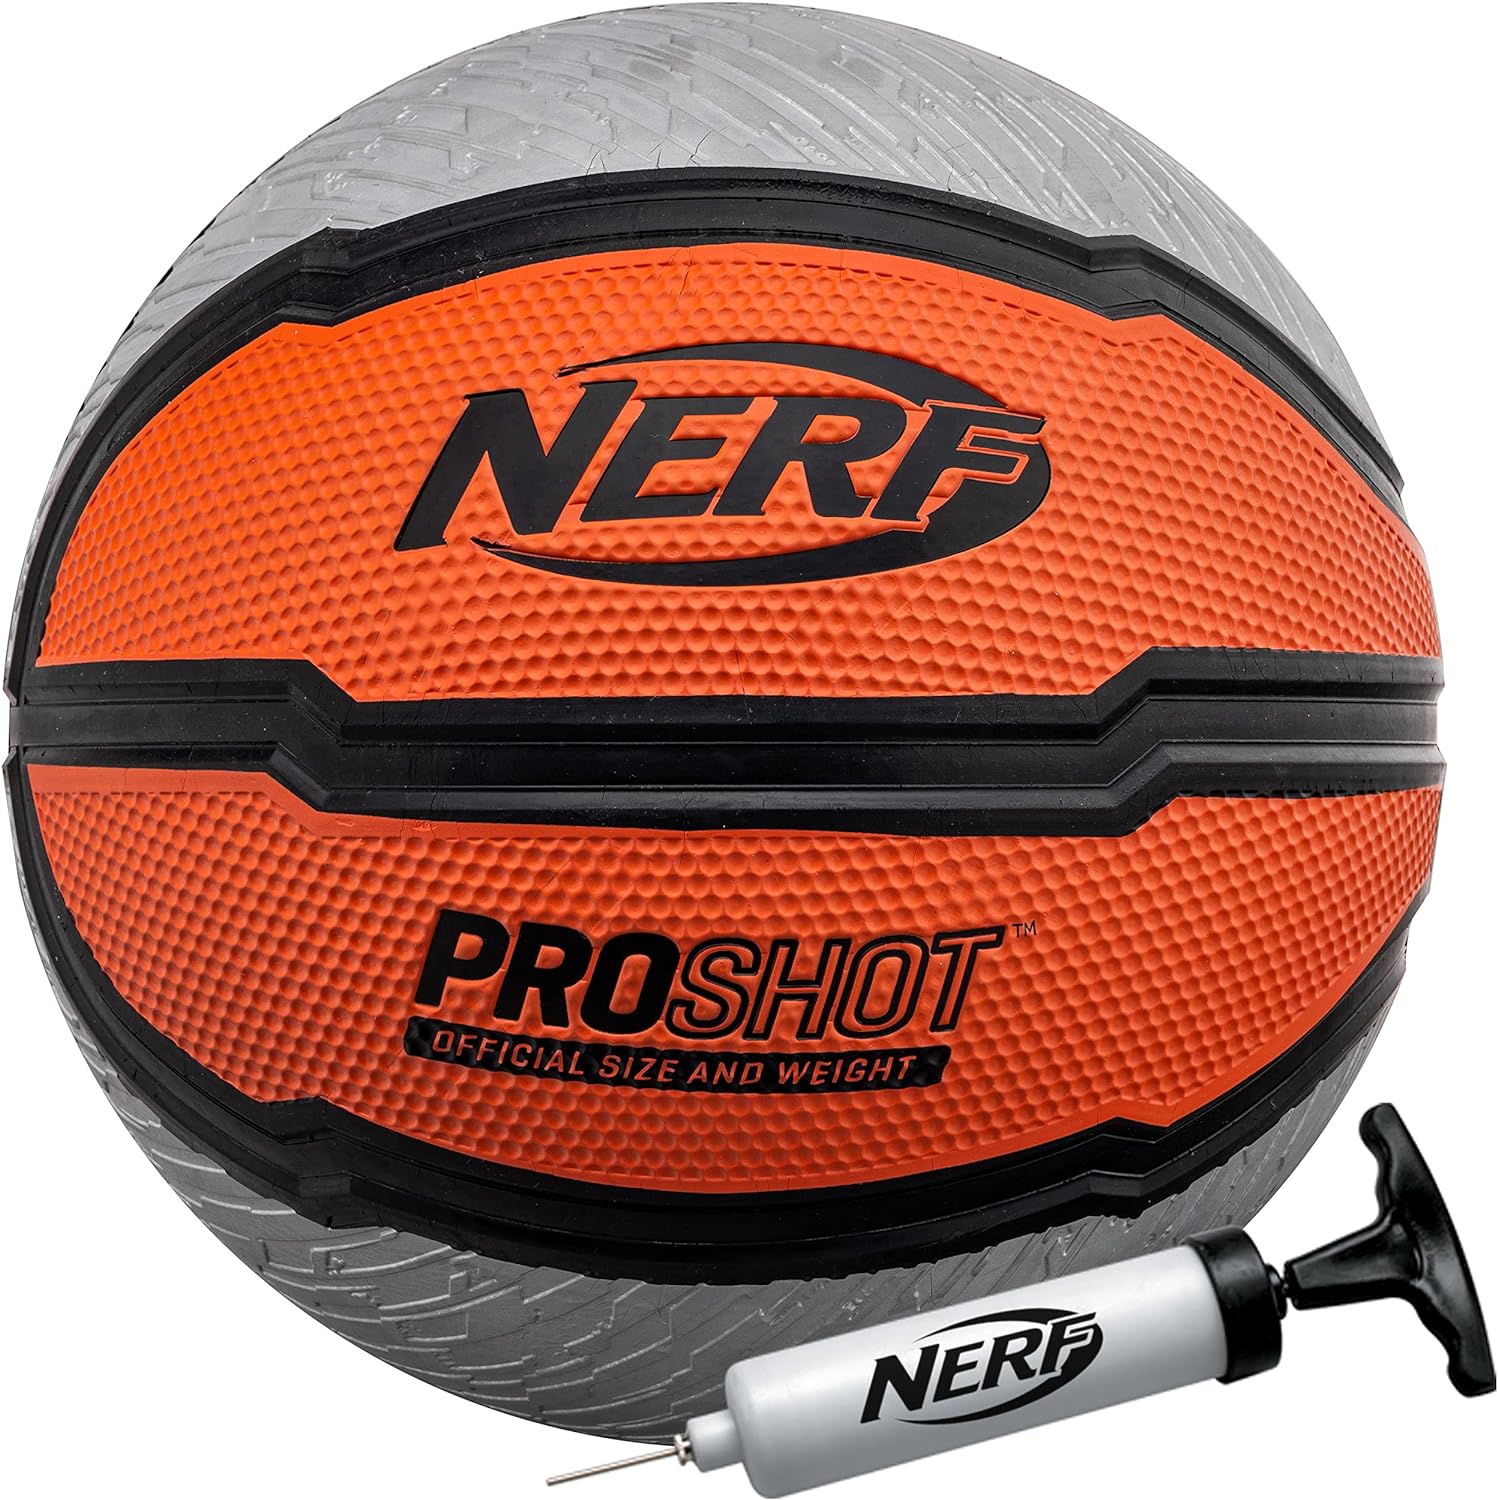 NERF Indoor   Outdoor Basketball - Proshot Official Size 29.5 Basketball   Air Inflation Pump - Extra Grip Basketball for Gym   Driveway Basketball Hoops - Regulation B7 Basketball - Black/Orange